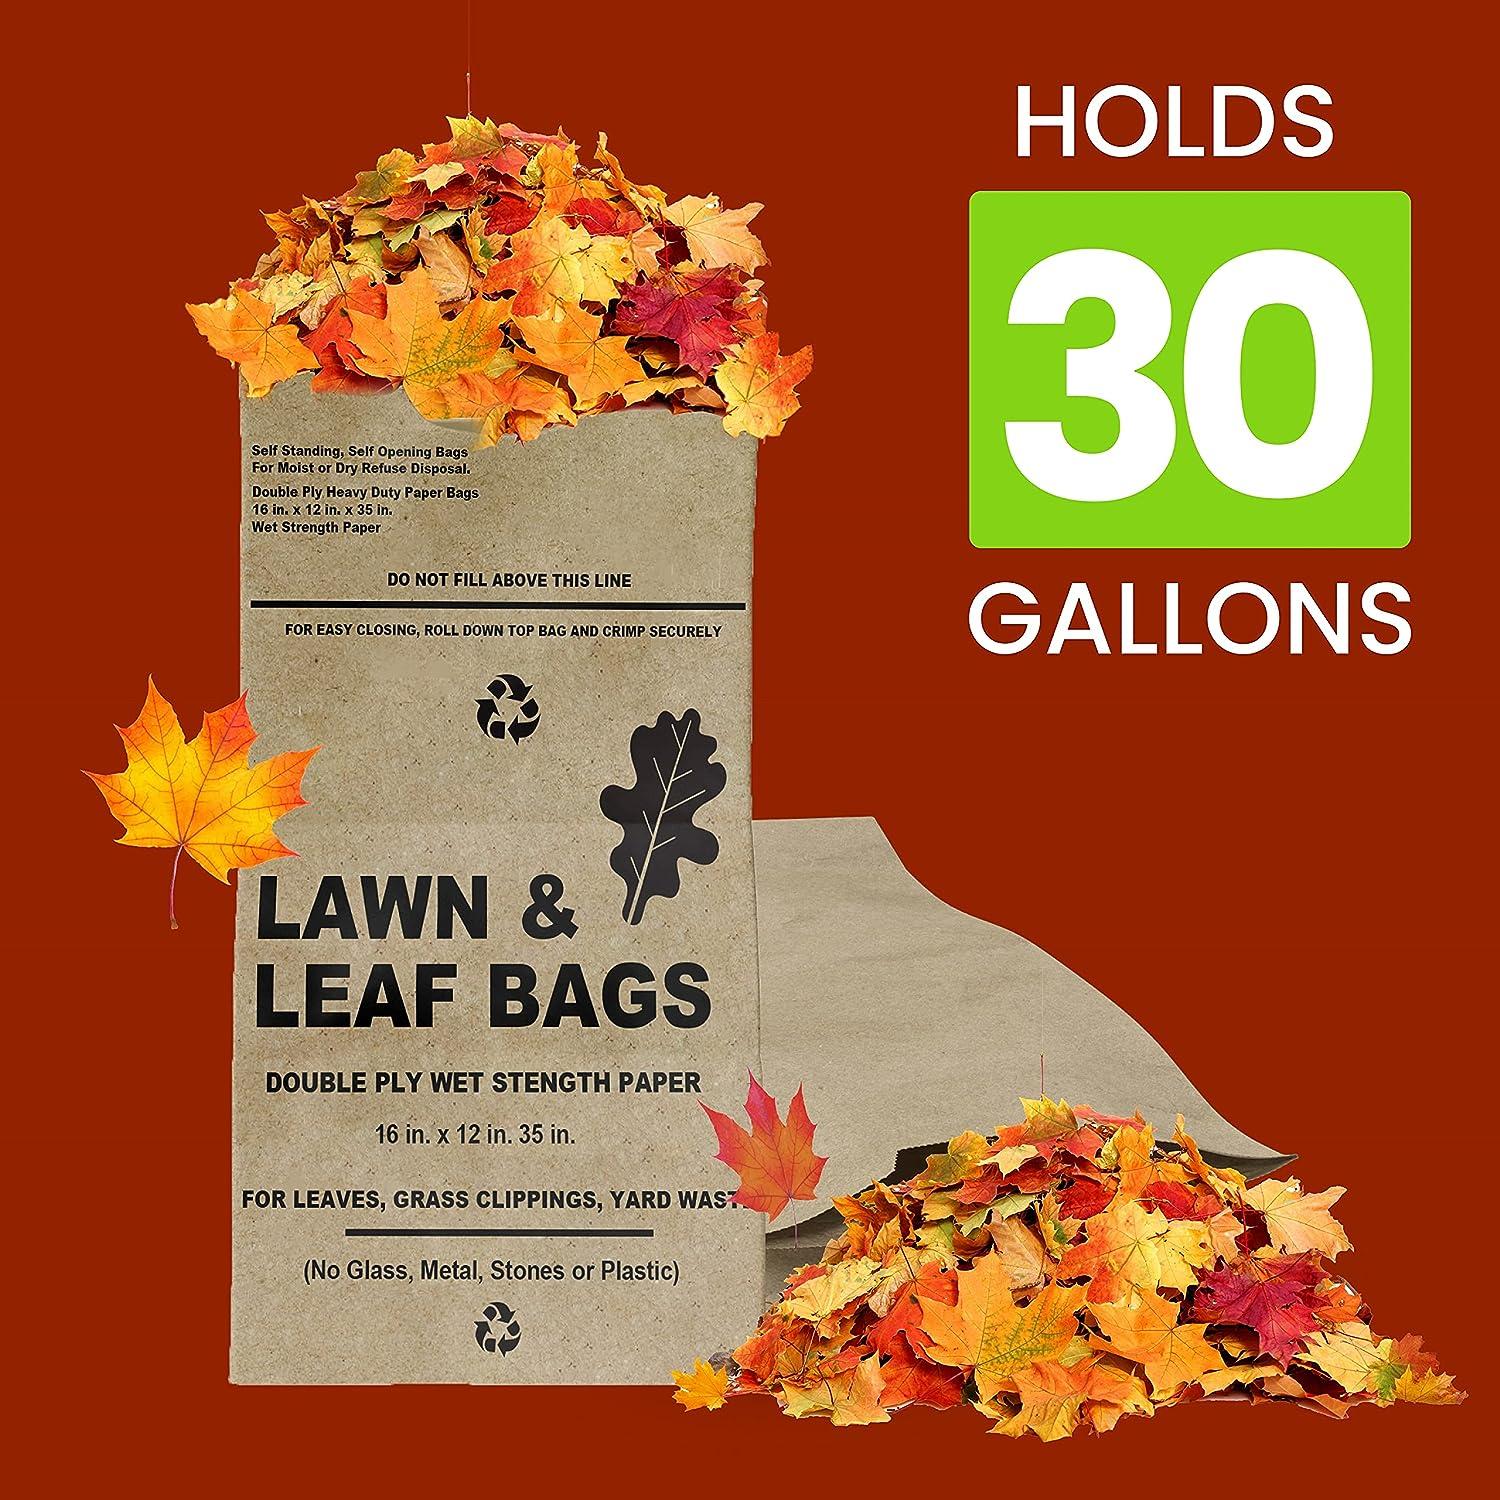 Heavy Duty Kraft Paper Lawn Paper Bags Brown 30 Gallons Yard Waste